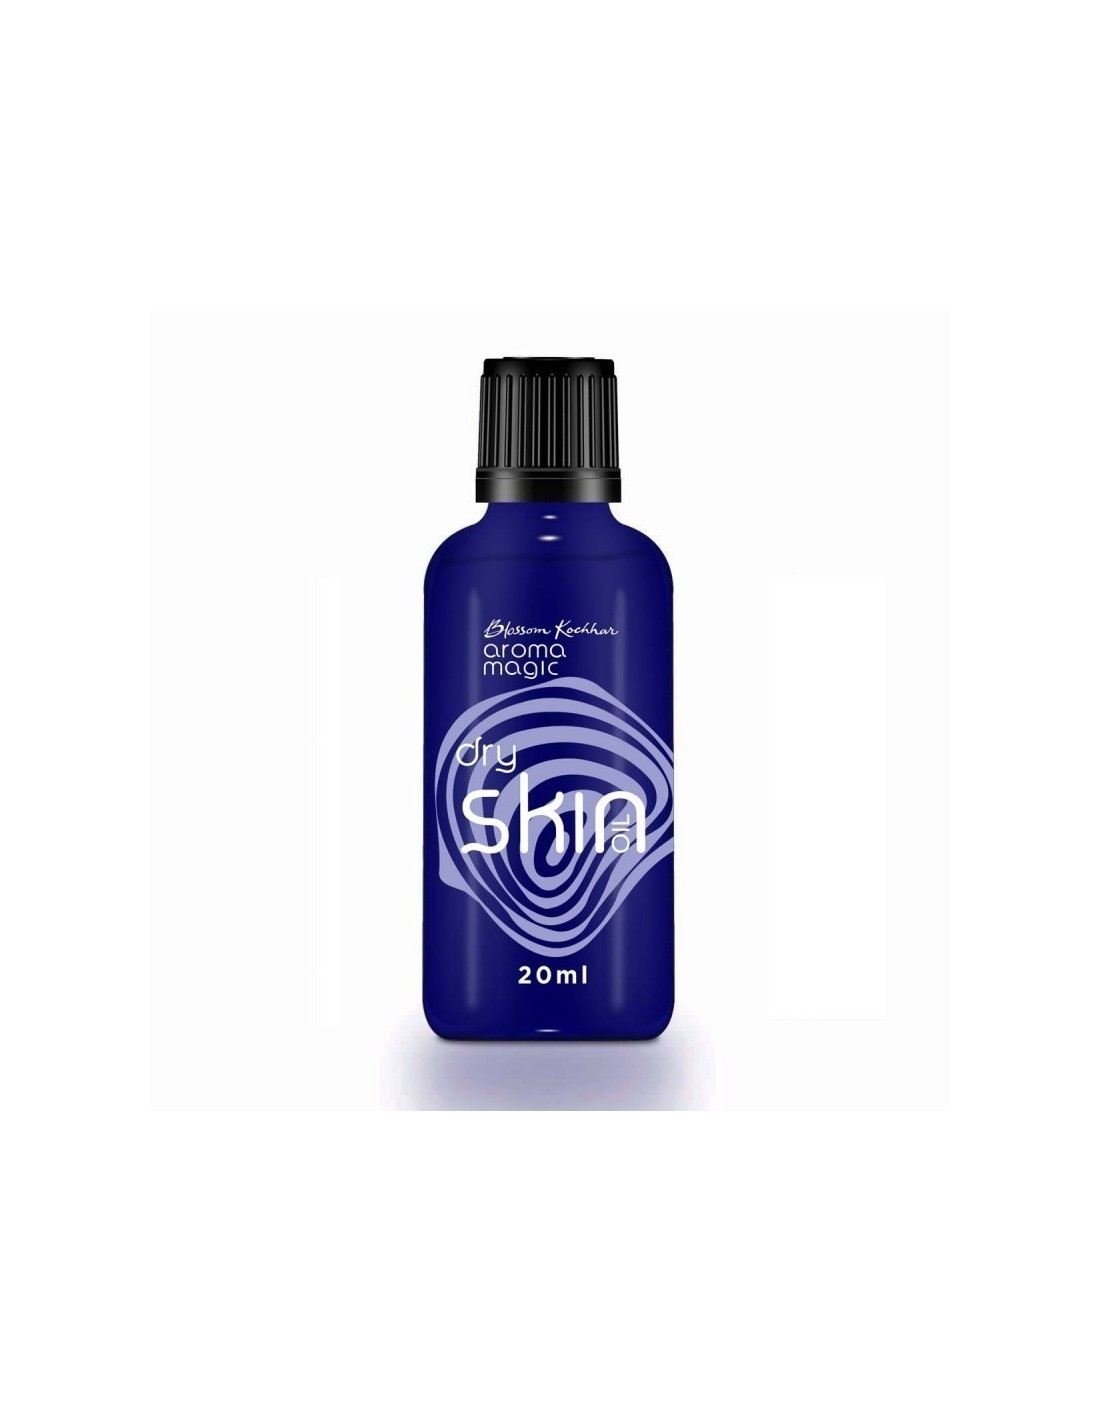 Aroma magic dry skin oil 20ml